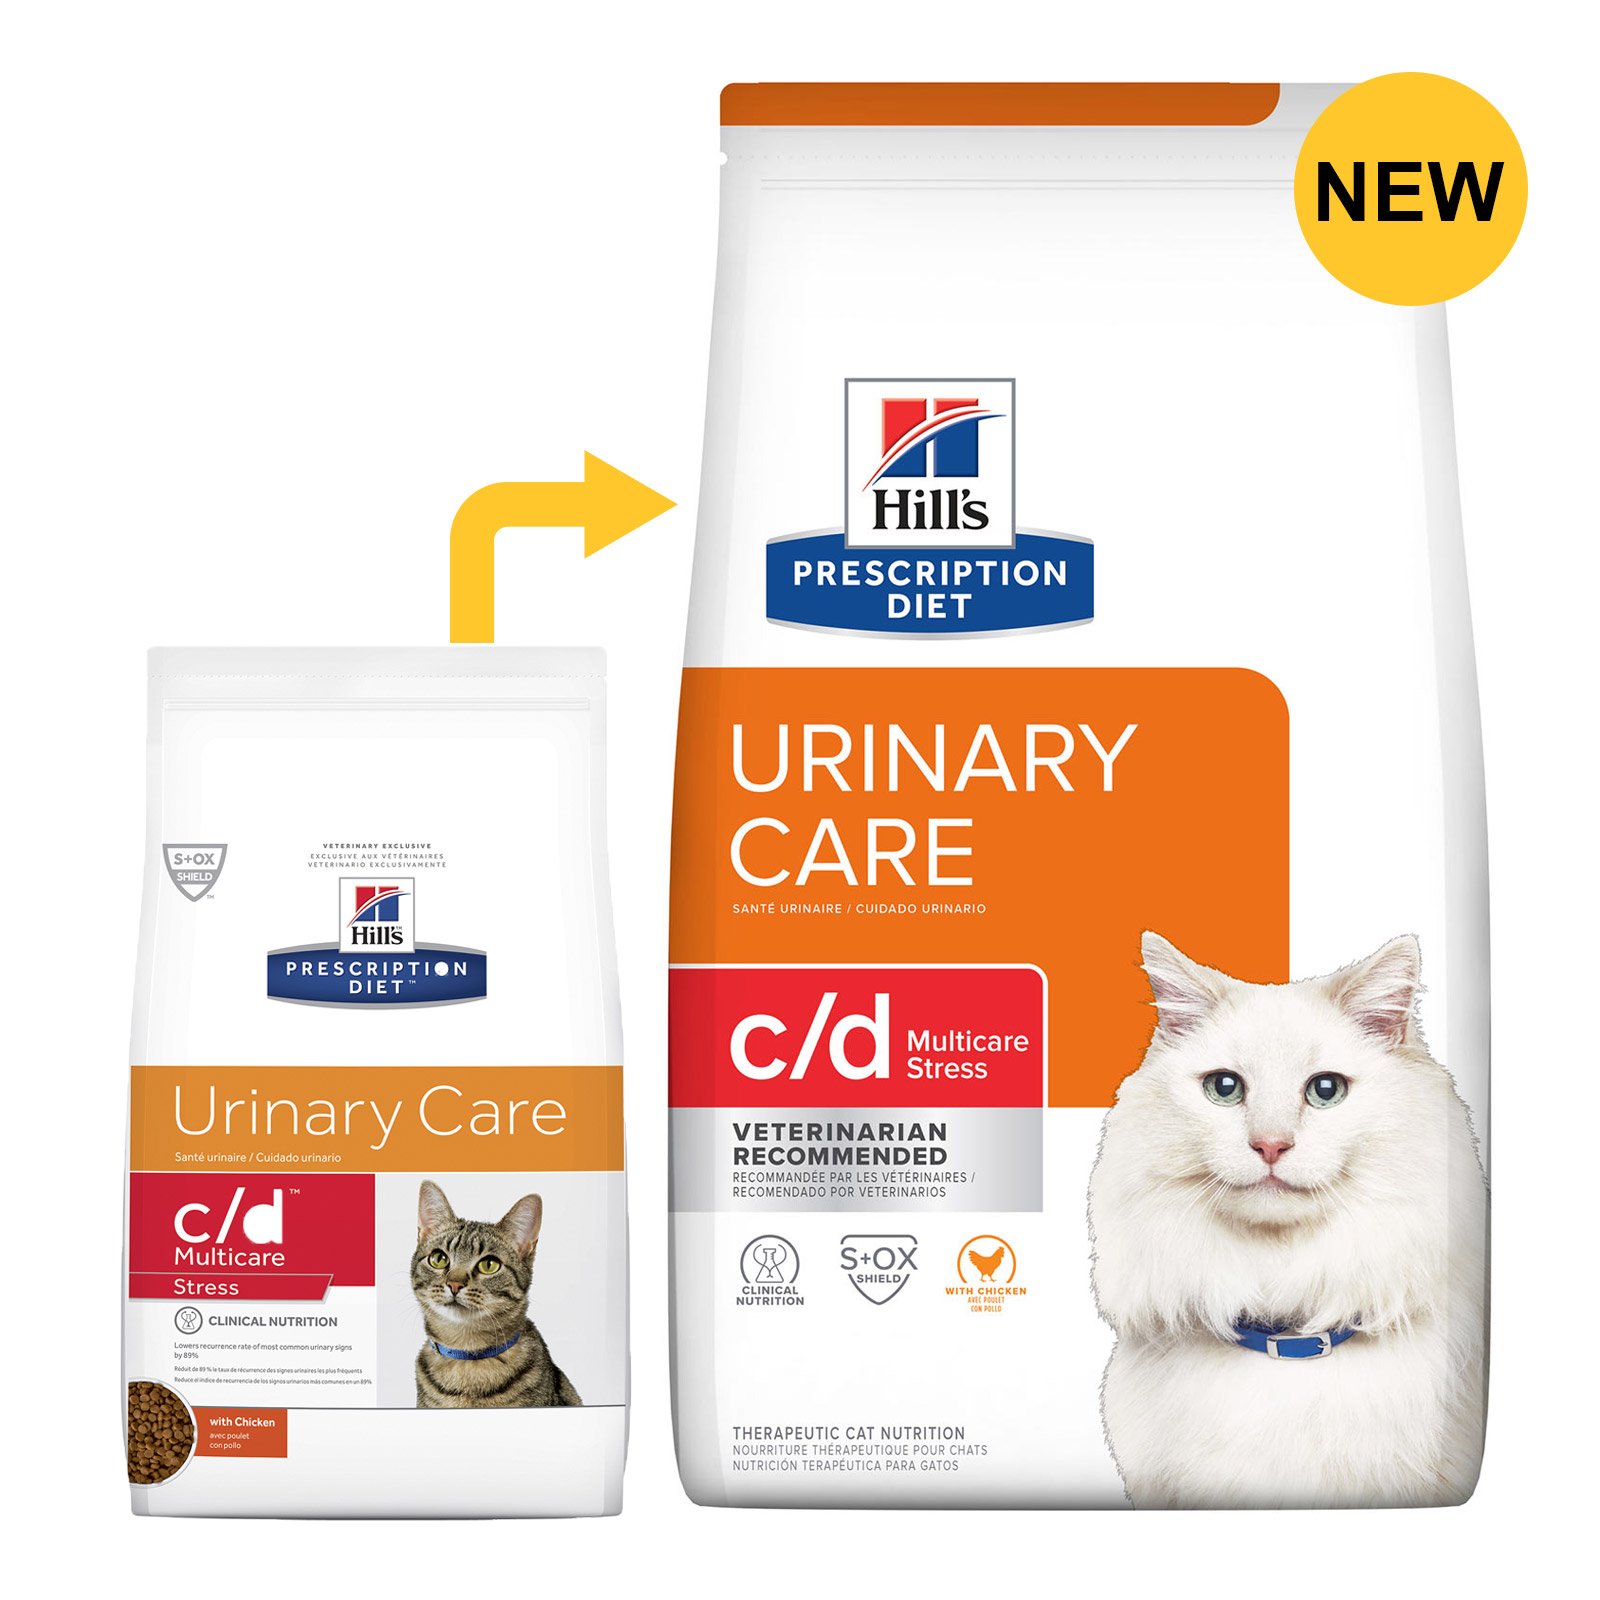 Hill's Prescription Diet c/d Multicare Stress Urinary Care Dry Cat Food 